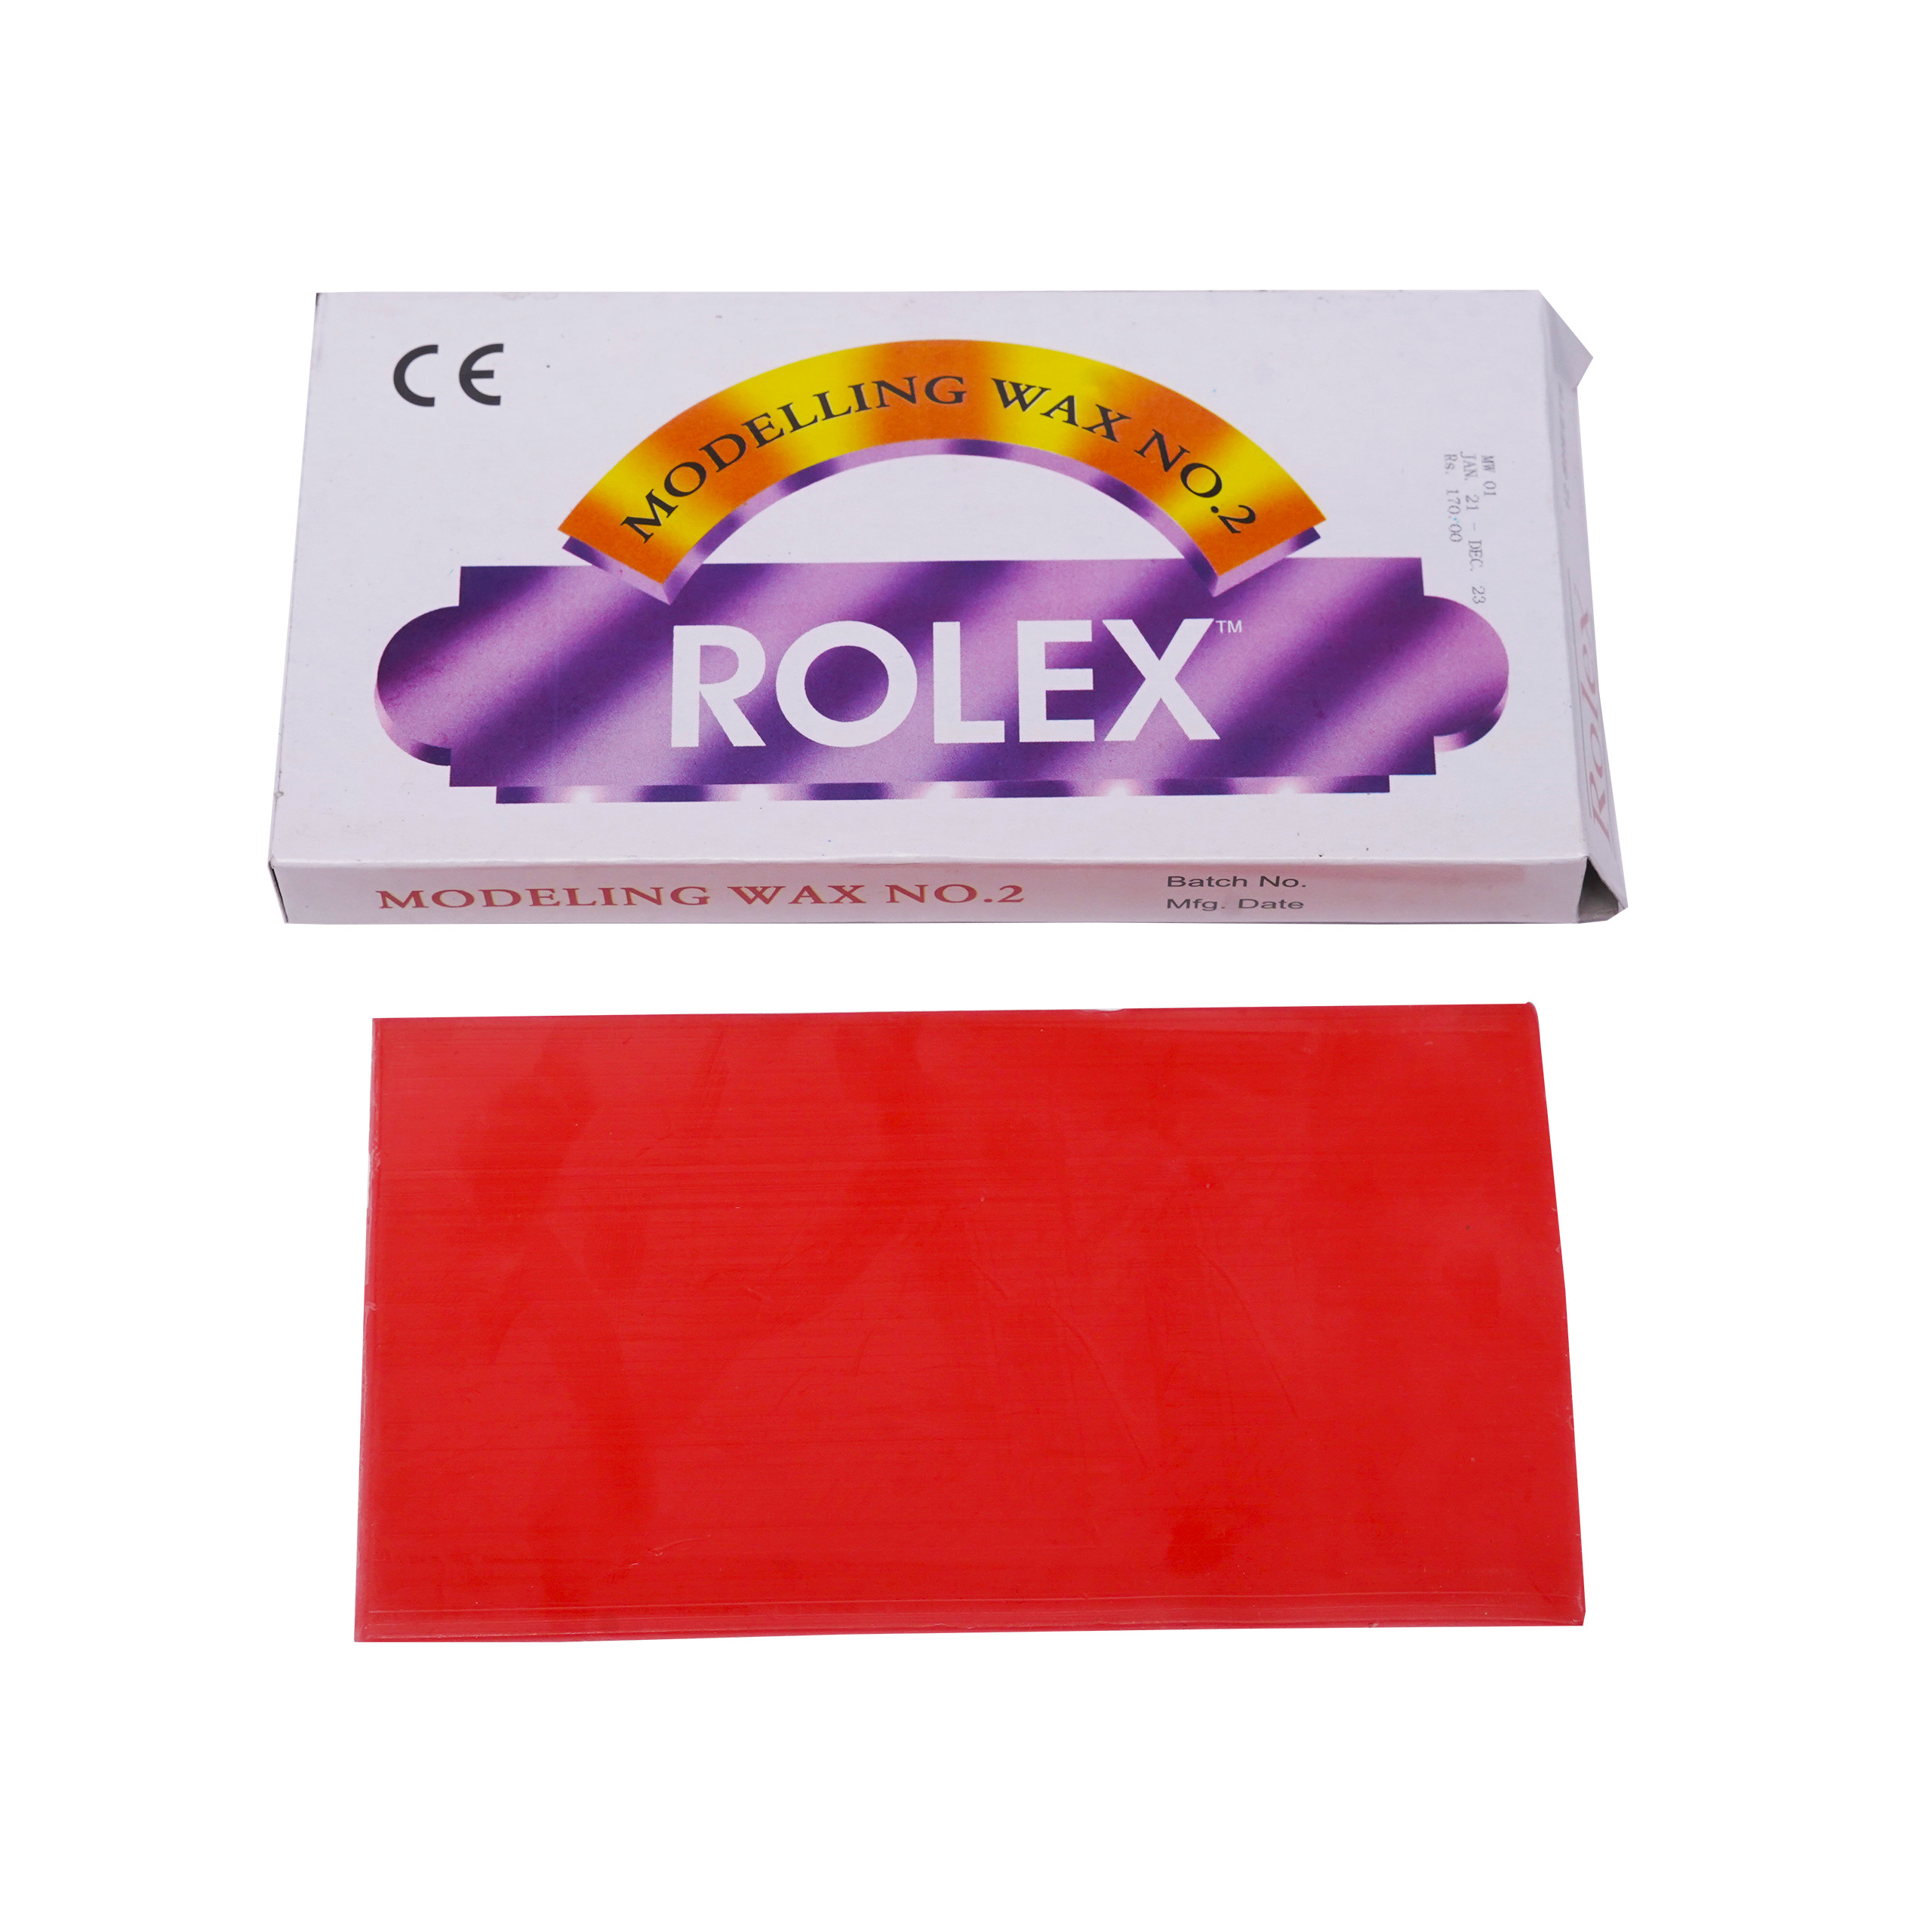 Rolex Modelling Wax